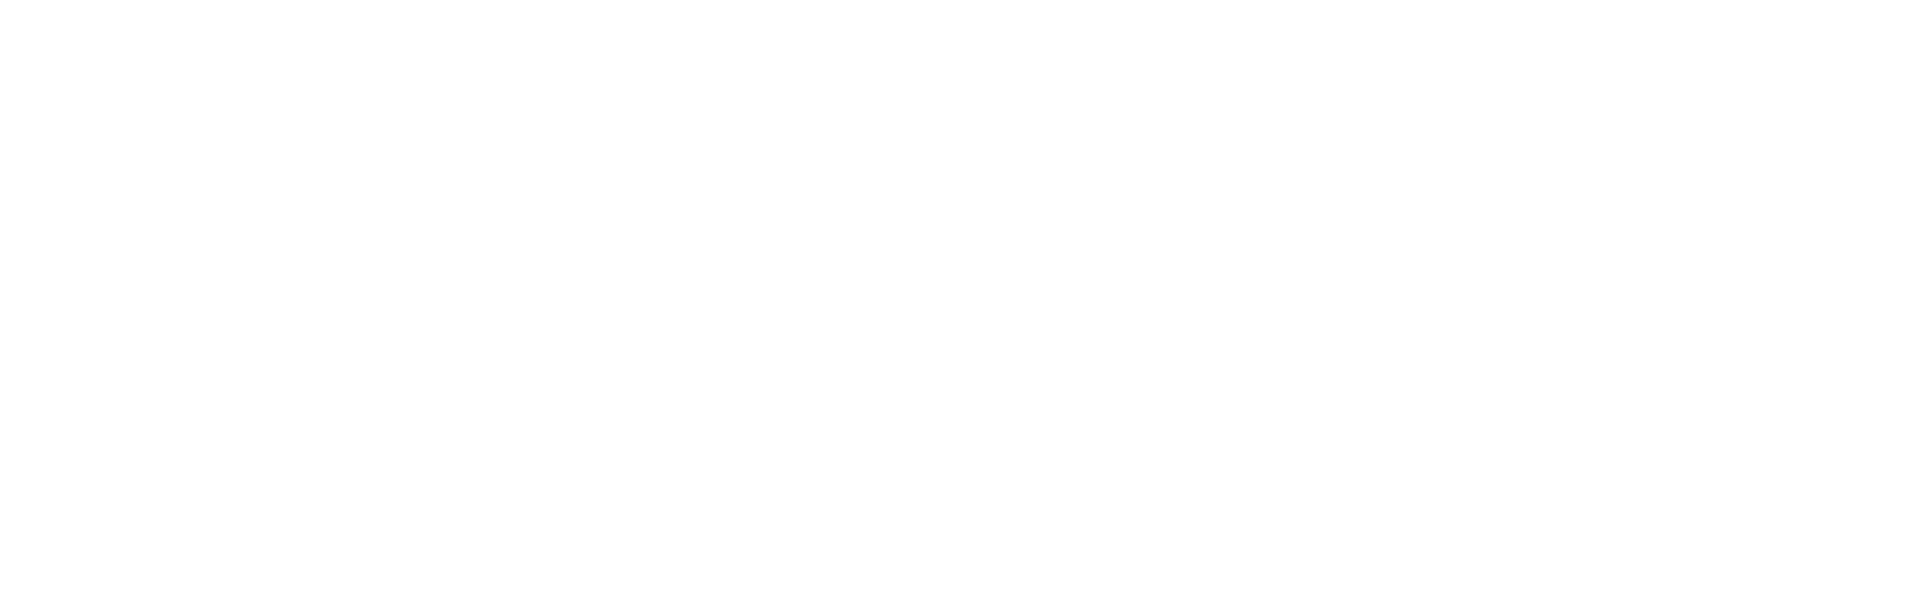 Jennings Mill Logo